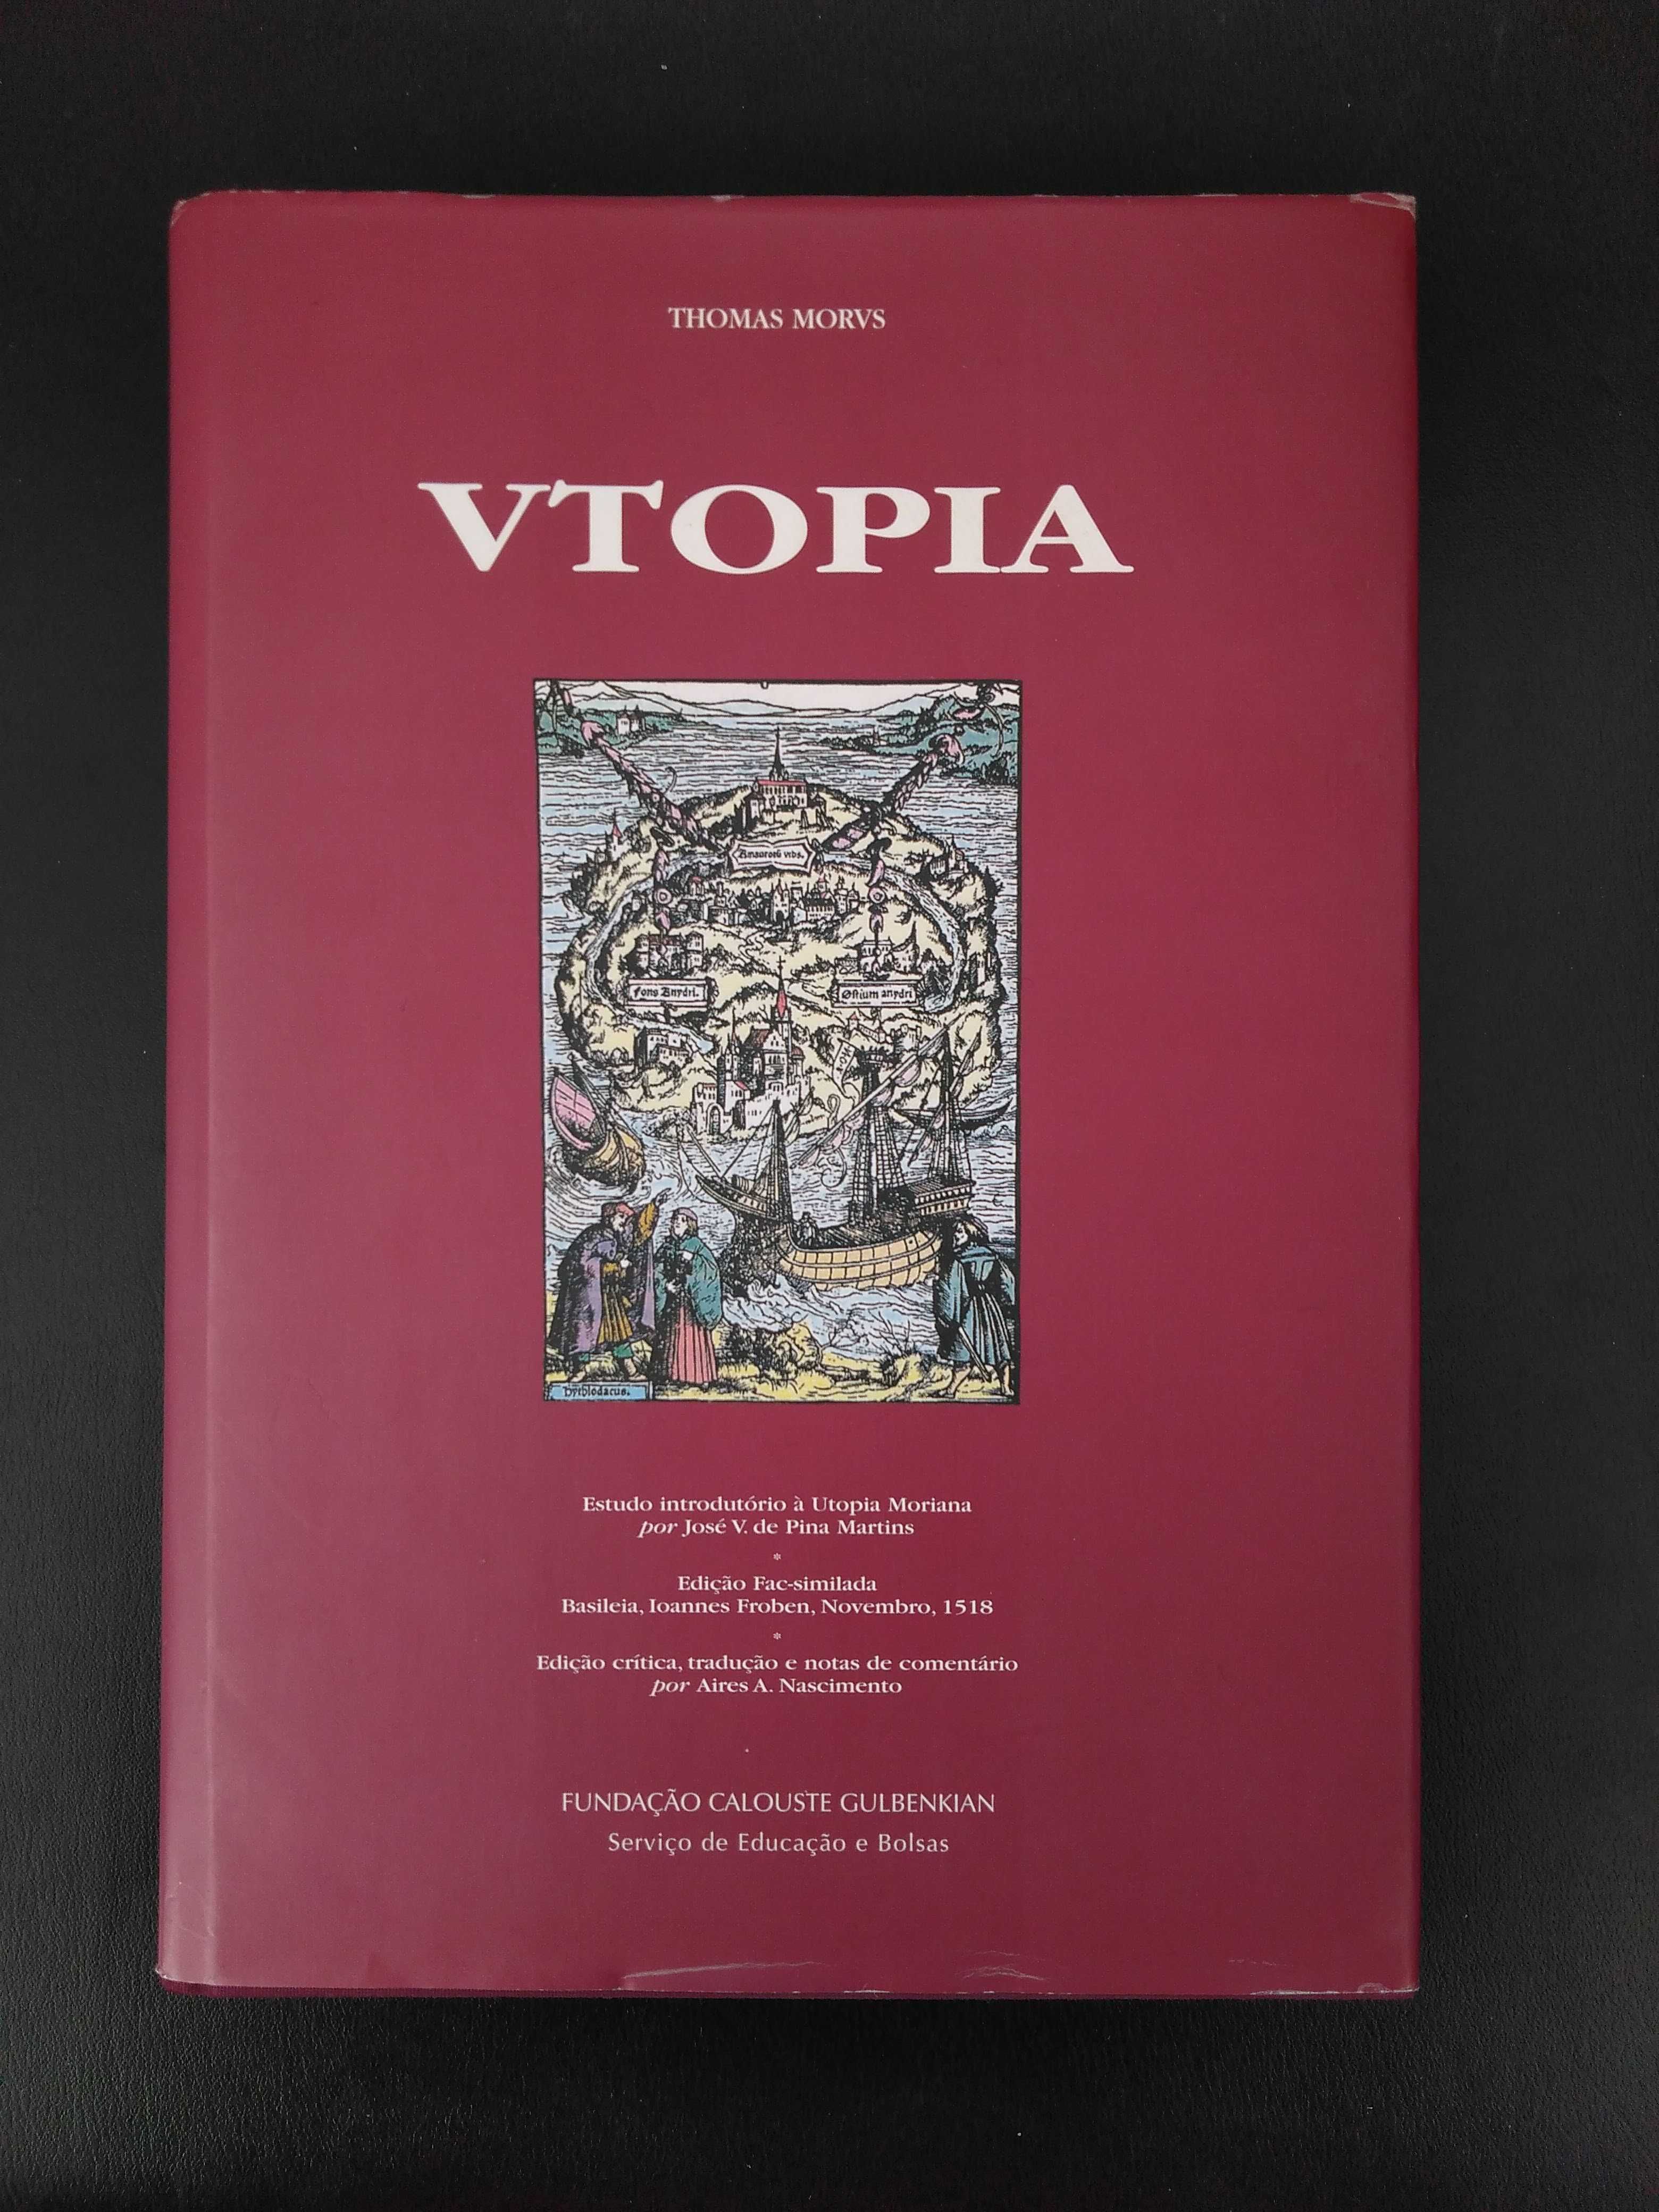 livro: Thomas Morus "Utopia"